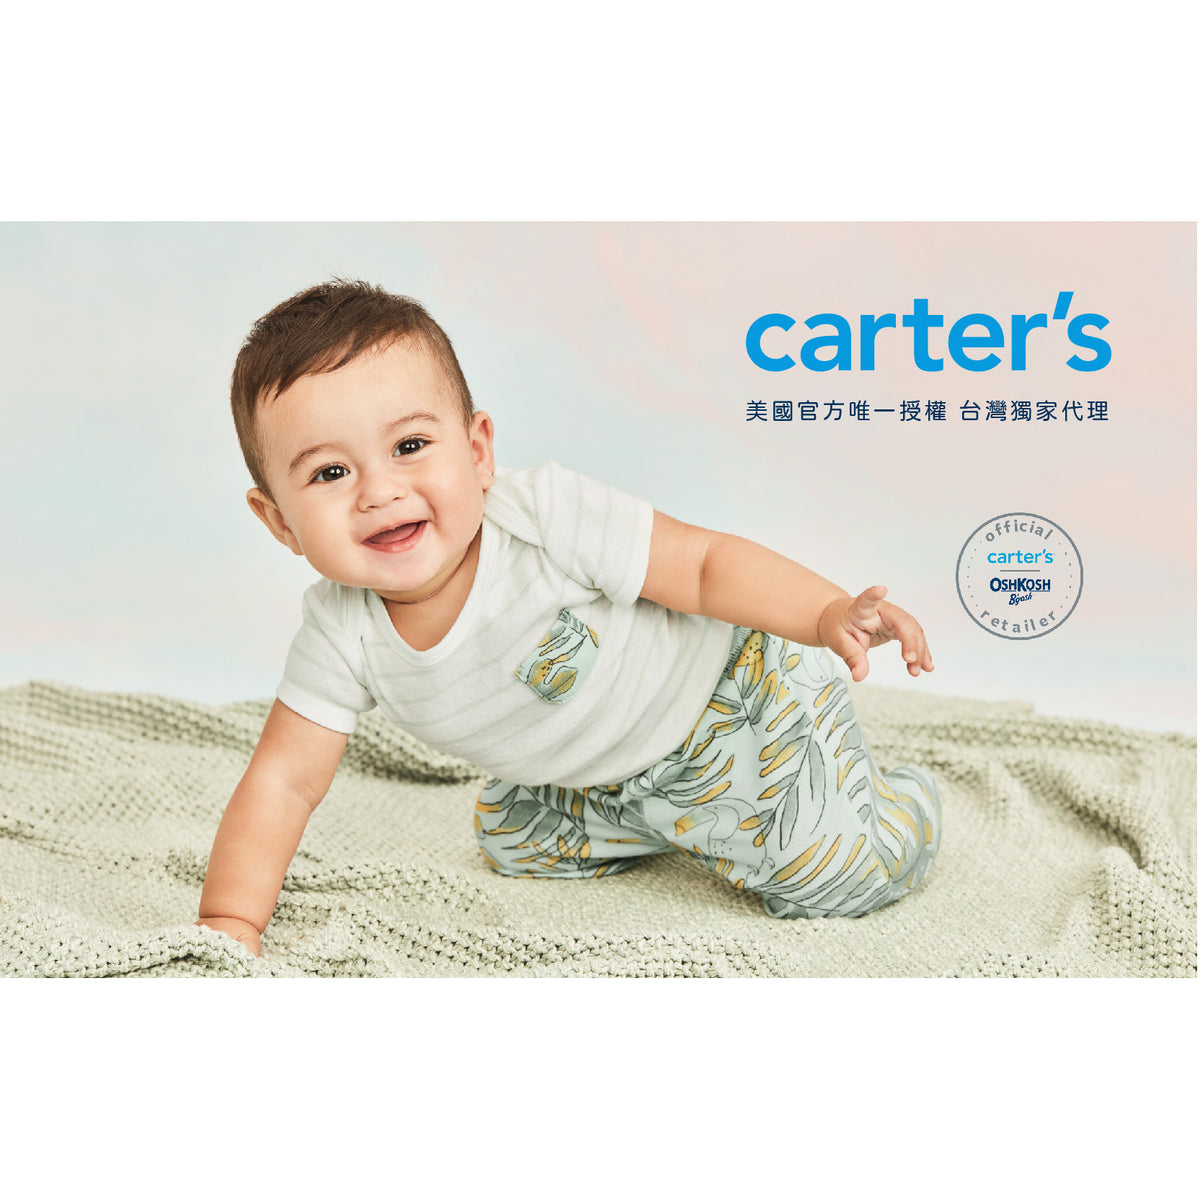 Carter's 溫暖秋韻套裝3件組套裝(6M-24M)